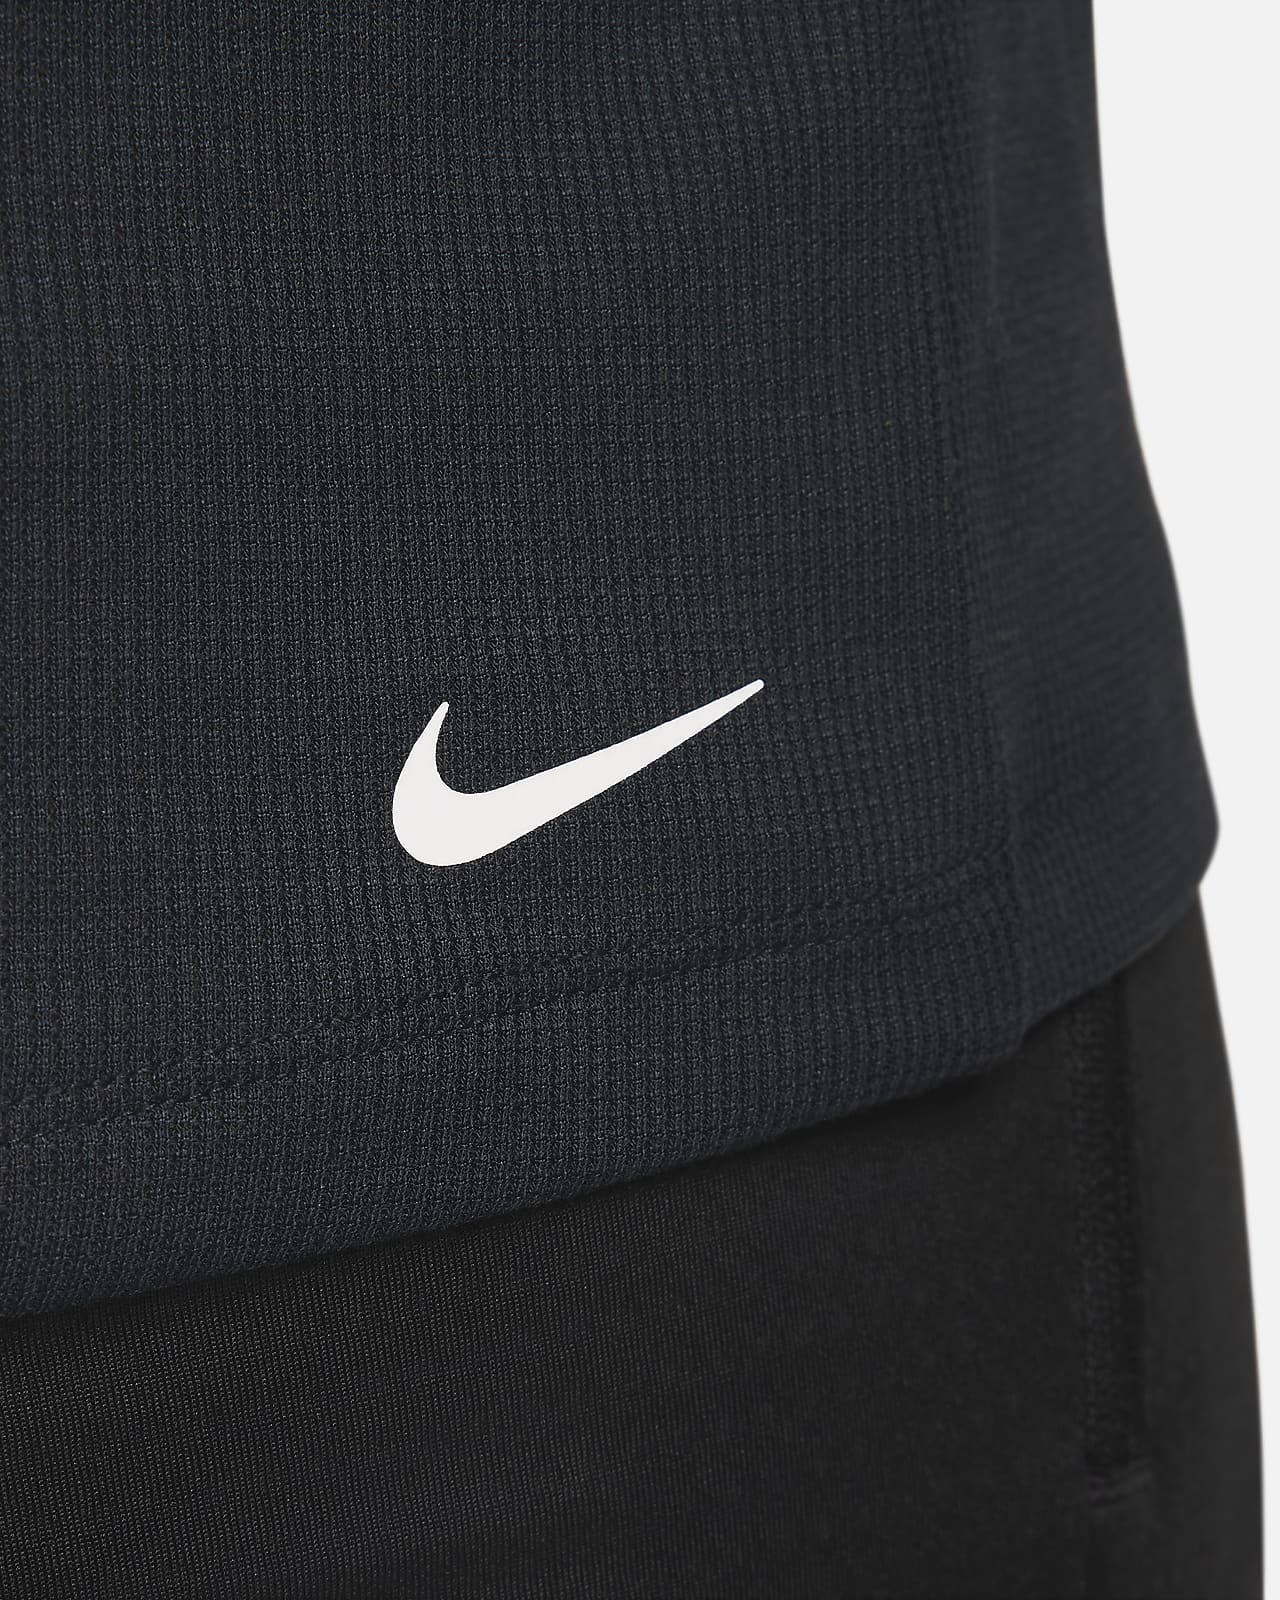 Nike Trail Men's Dri-FIT Long-Sleeve Running Top.